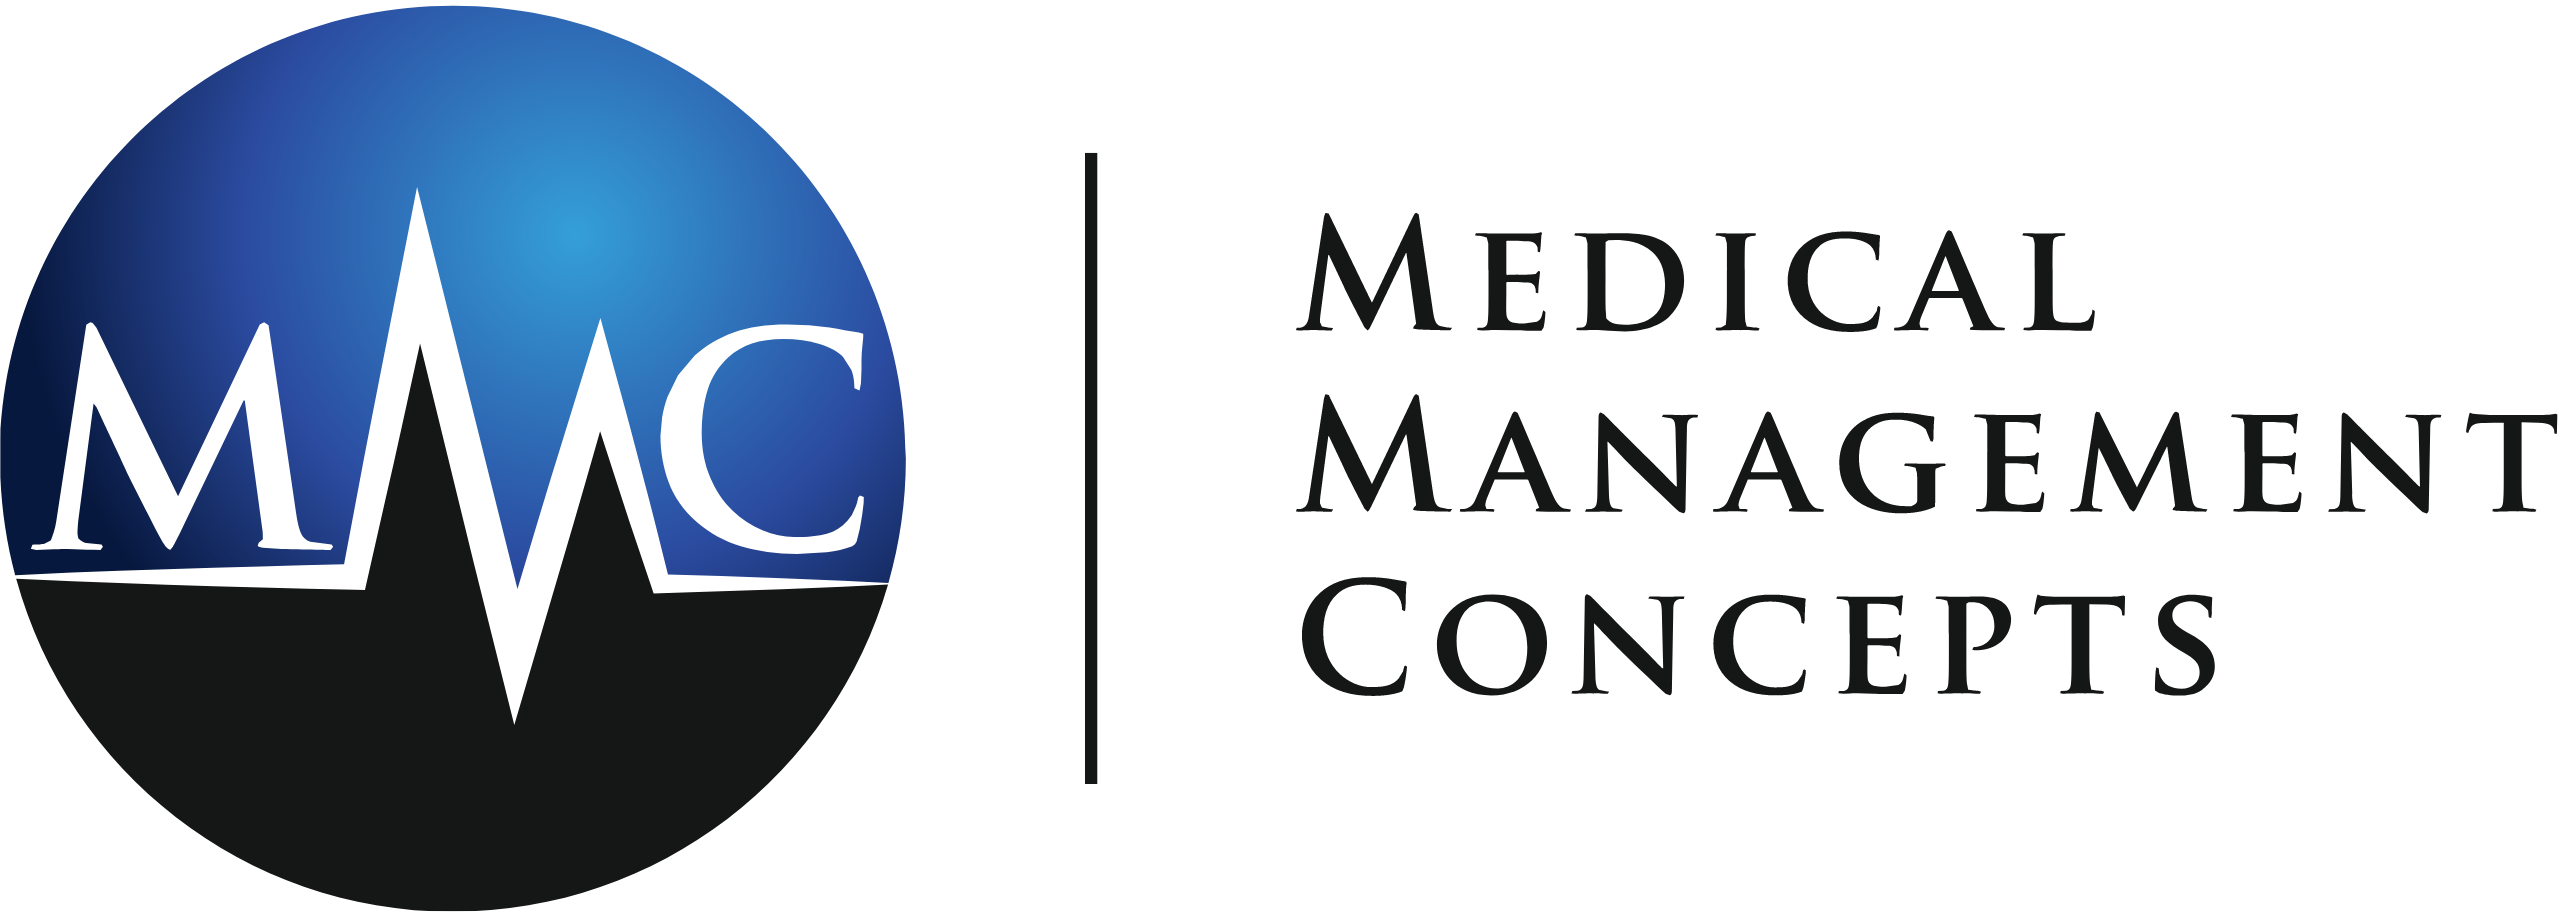 Medical Management Concepts